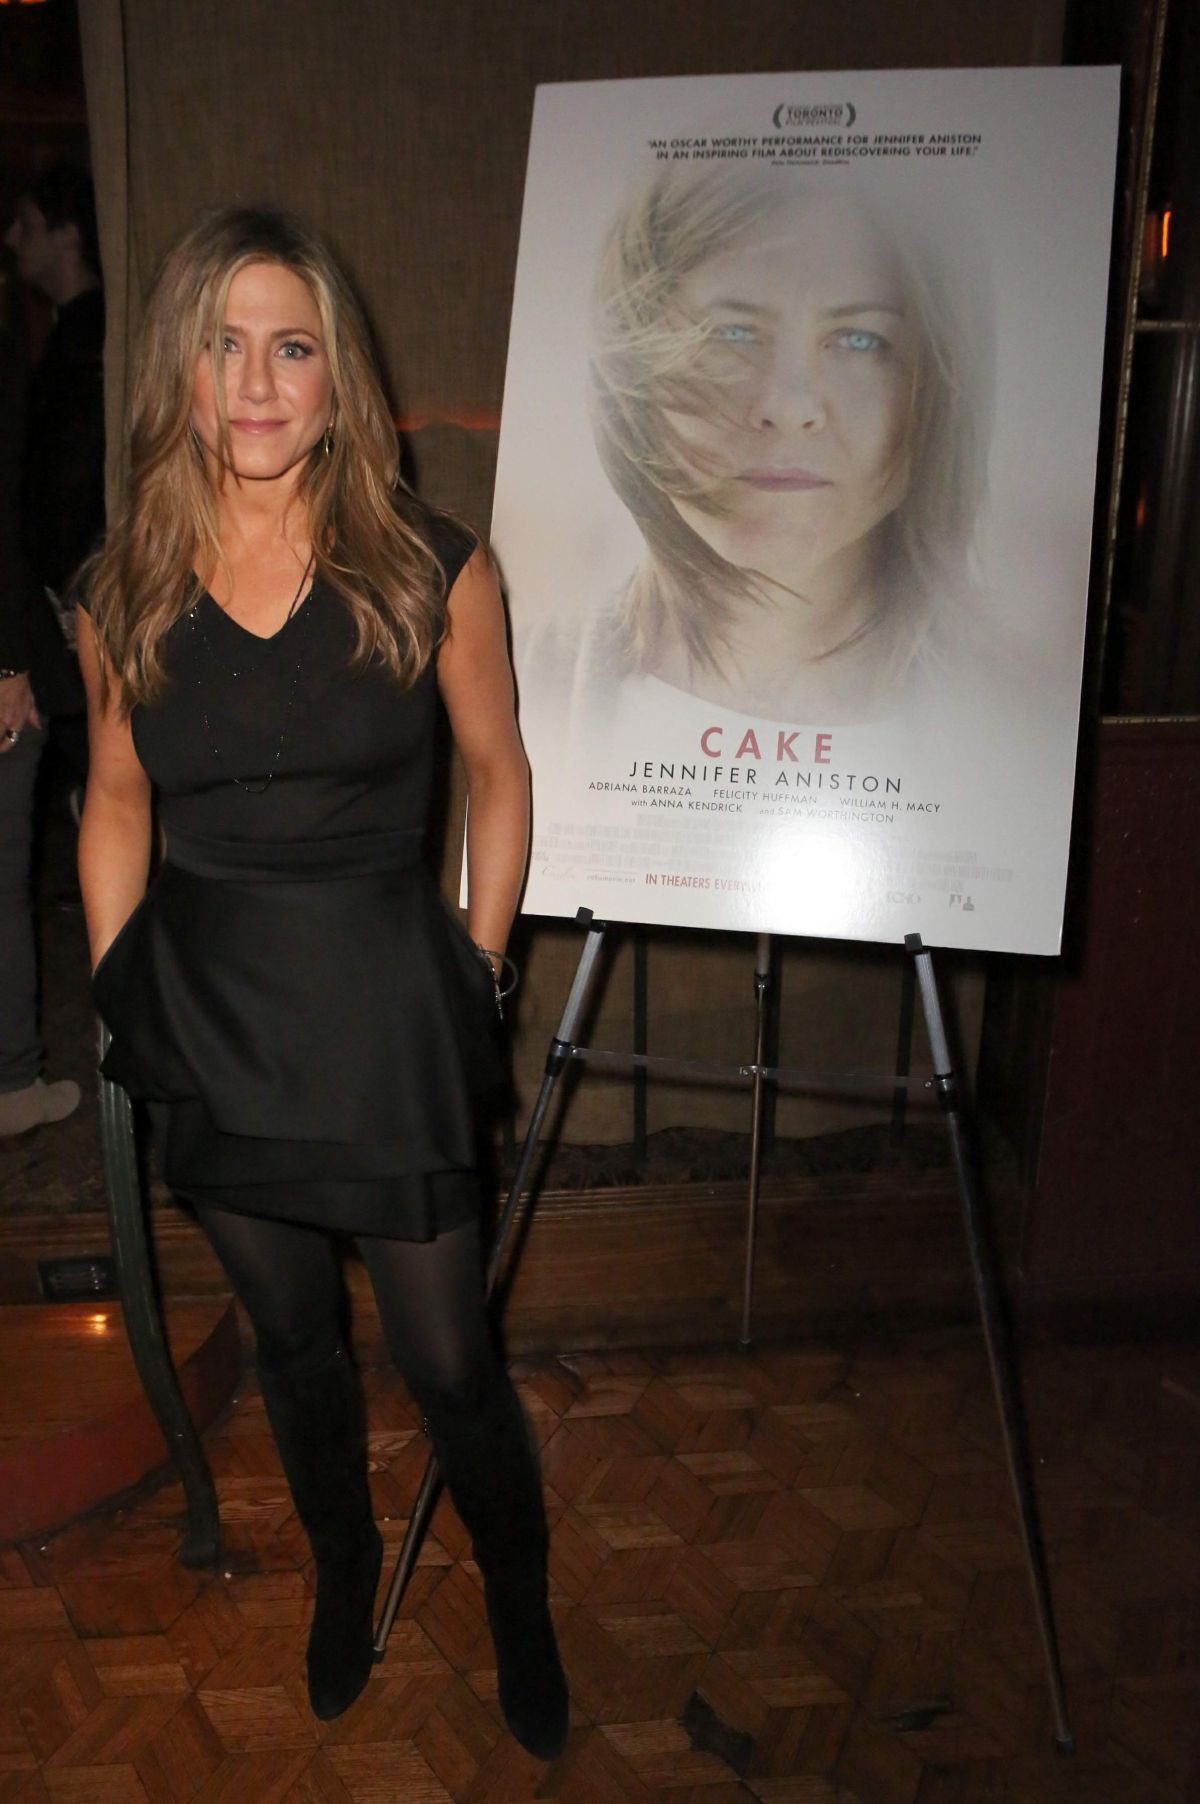 Cake Official Trailer #1 2014 - Jennifer Aniston, Anna